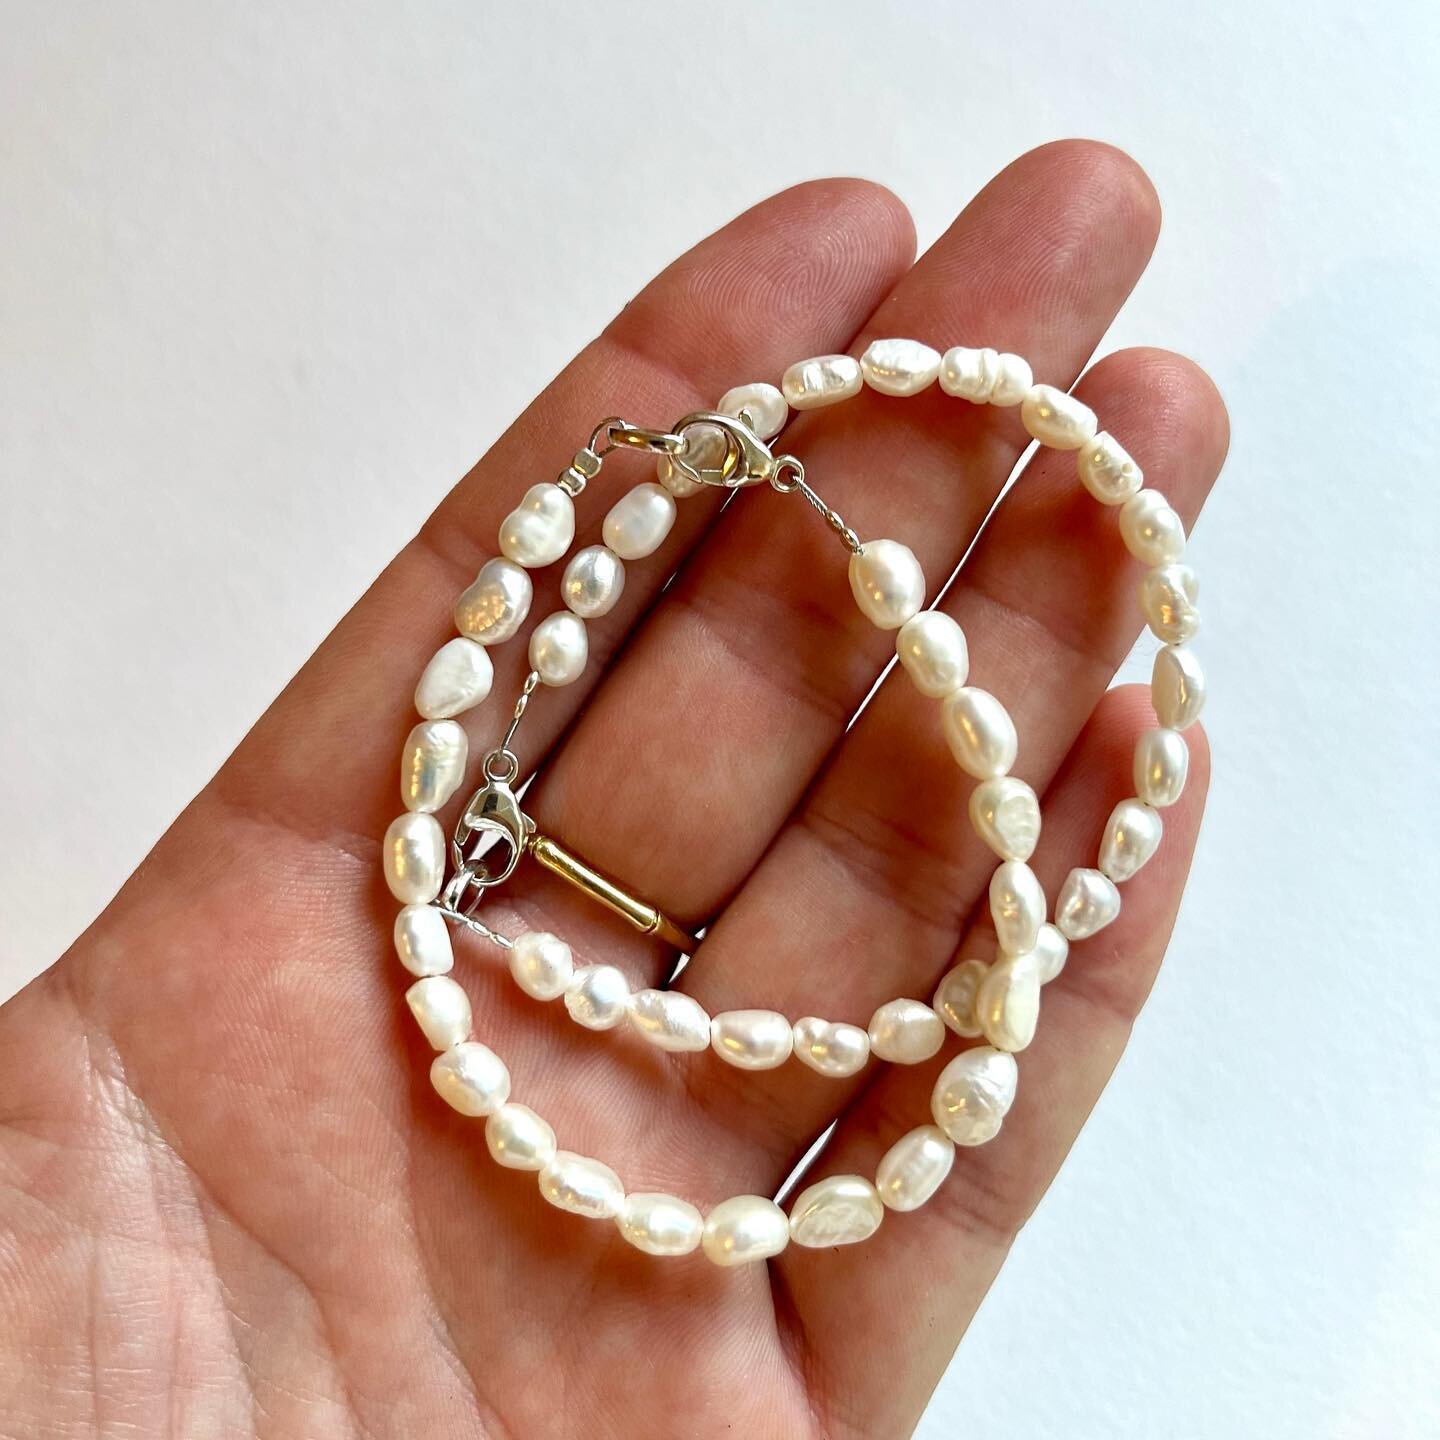 Seven matching custom pearl bracelets for bestie bridesmaids. So cute! 🥹💞🌟